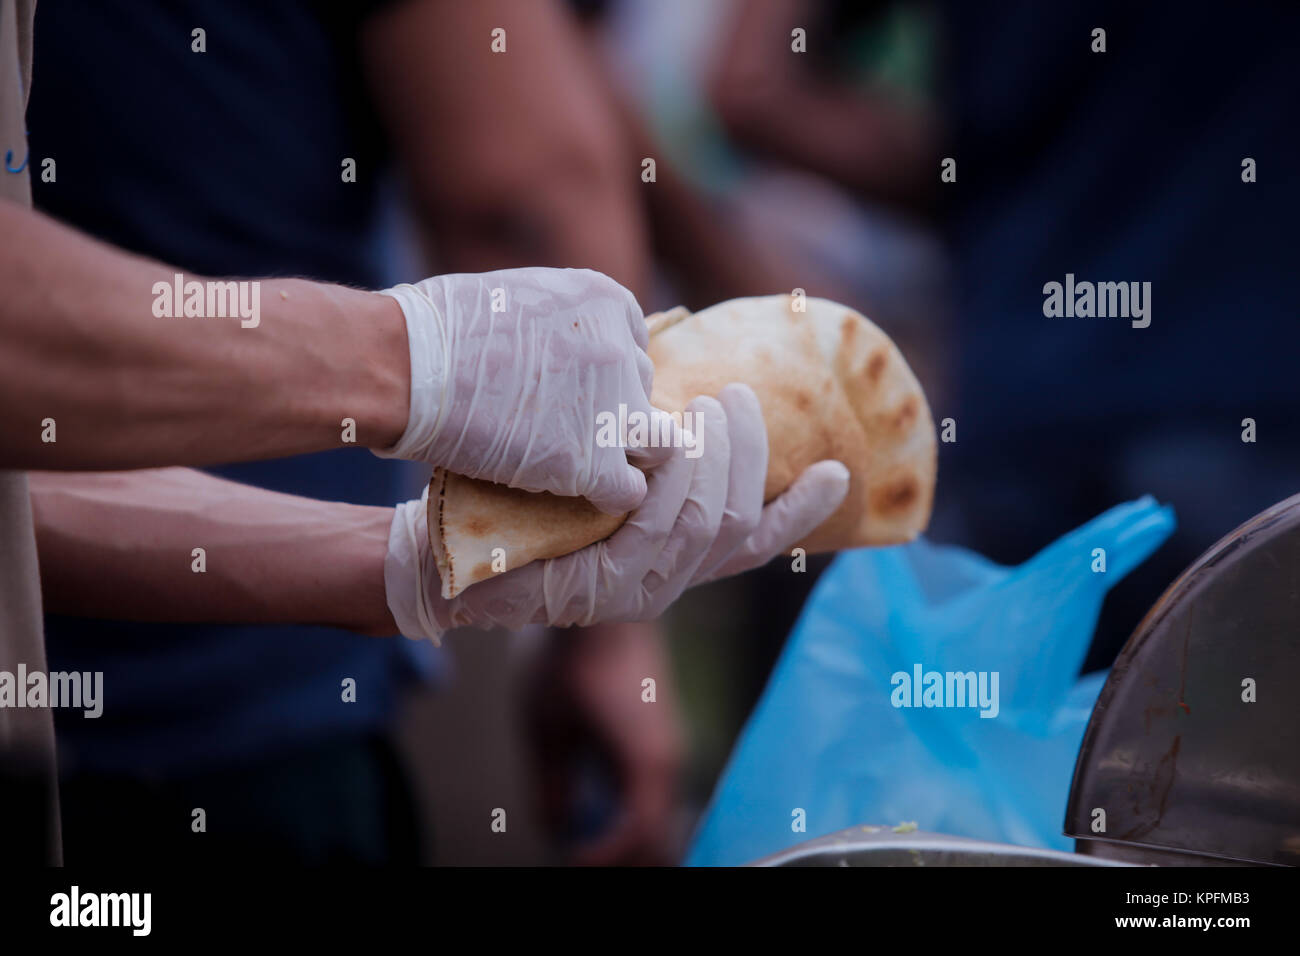 Man cutting and preparing doner kebab Stock Photo